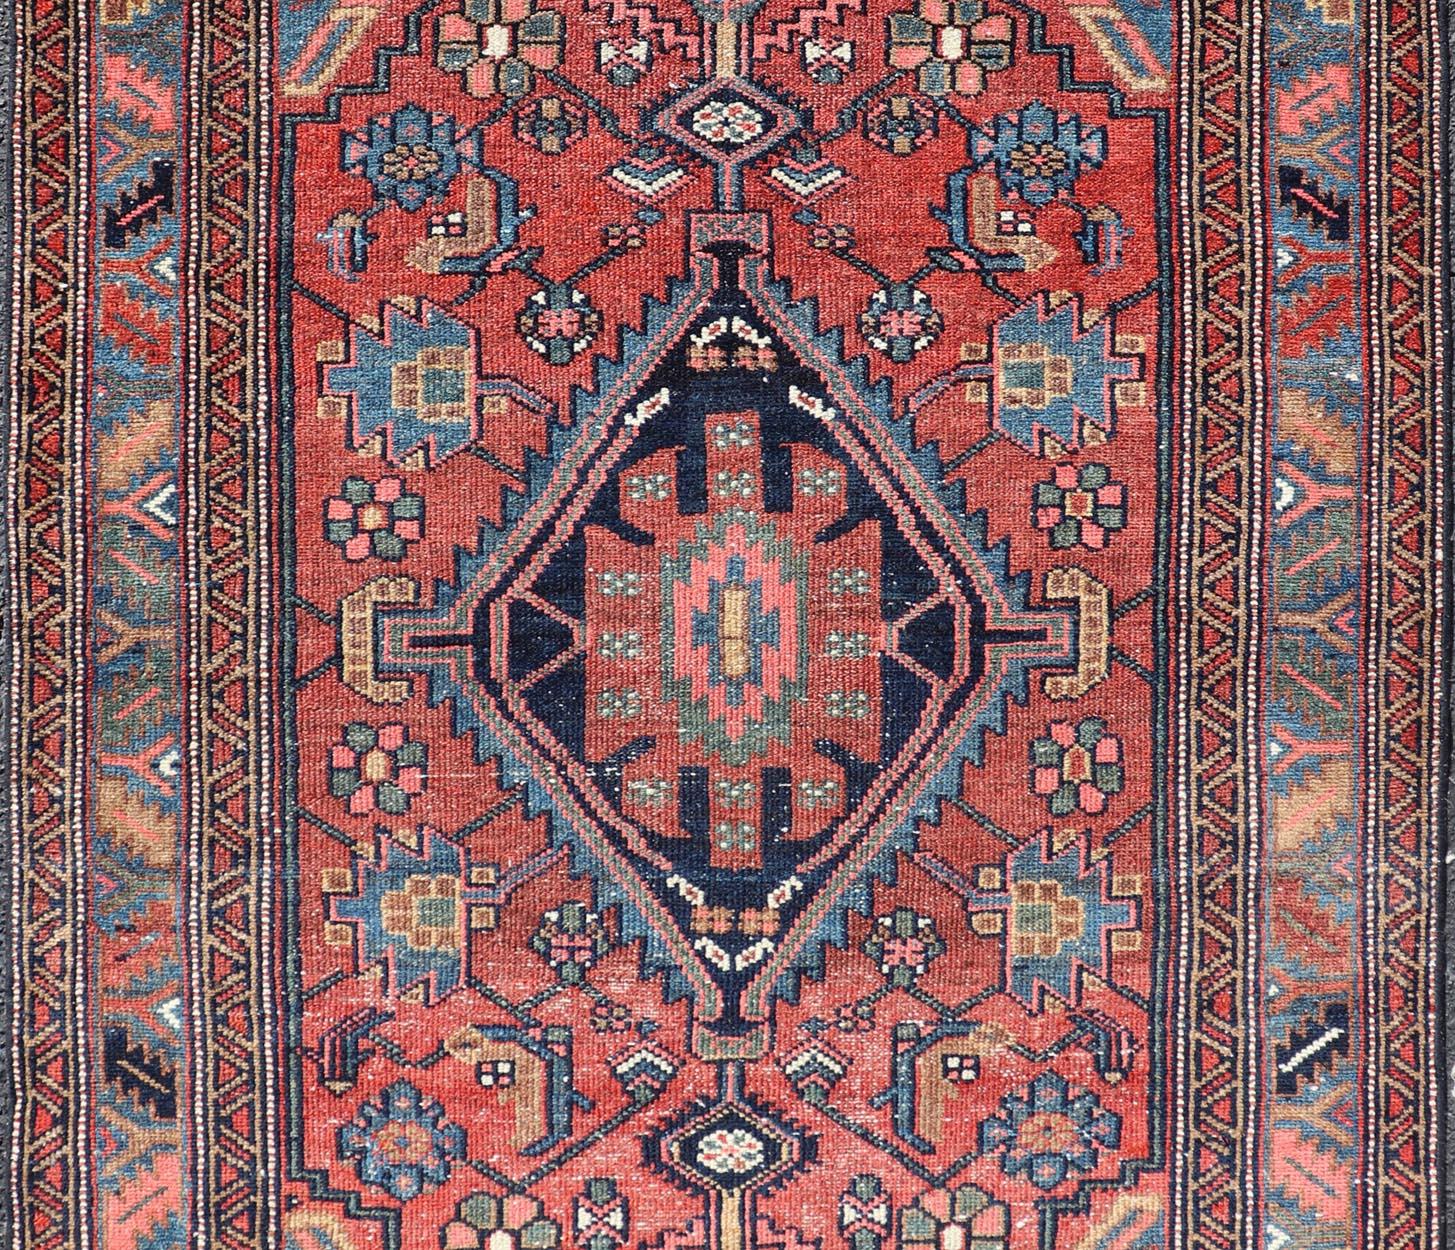 Antique Persian Hamadan rug in rich colors with geometric design, Keivan Woven Arts / rug EMB-9602-P13506, country of origin / type: Iran / Hamadan, circa 1920.

Measures: 3'5 x 6'3.